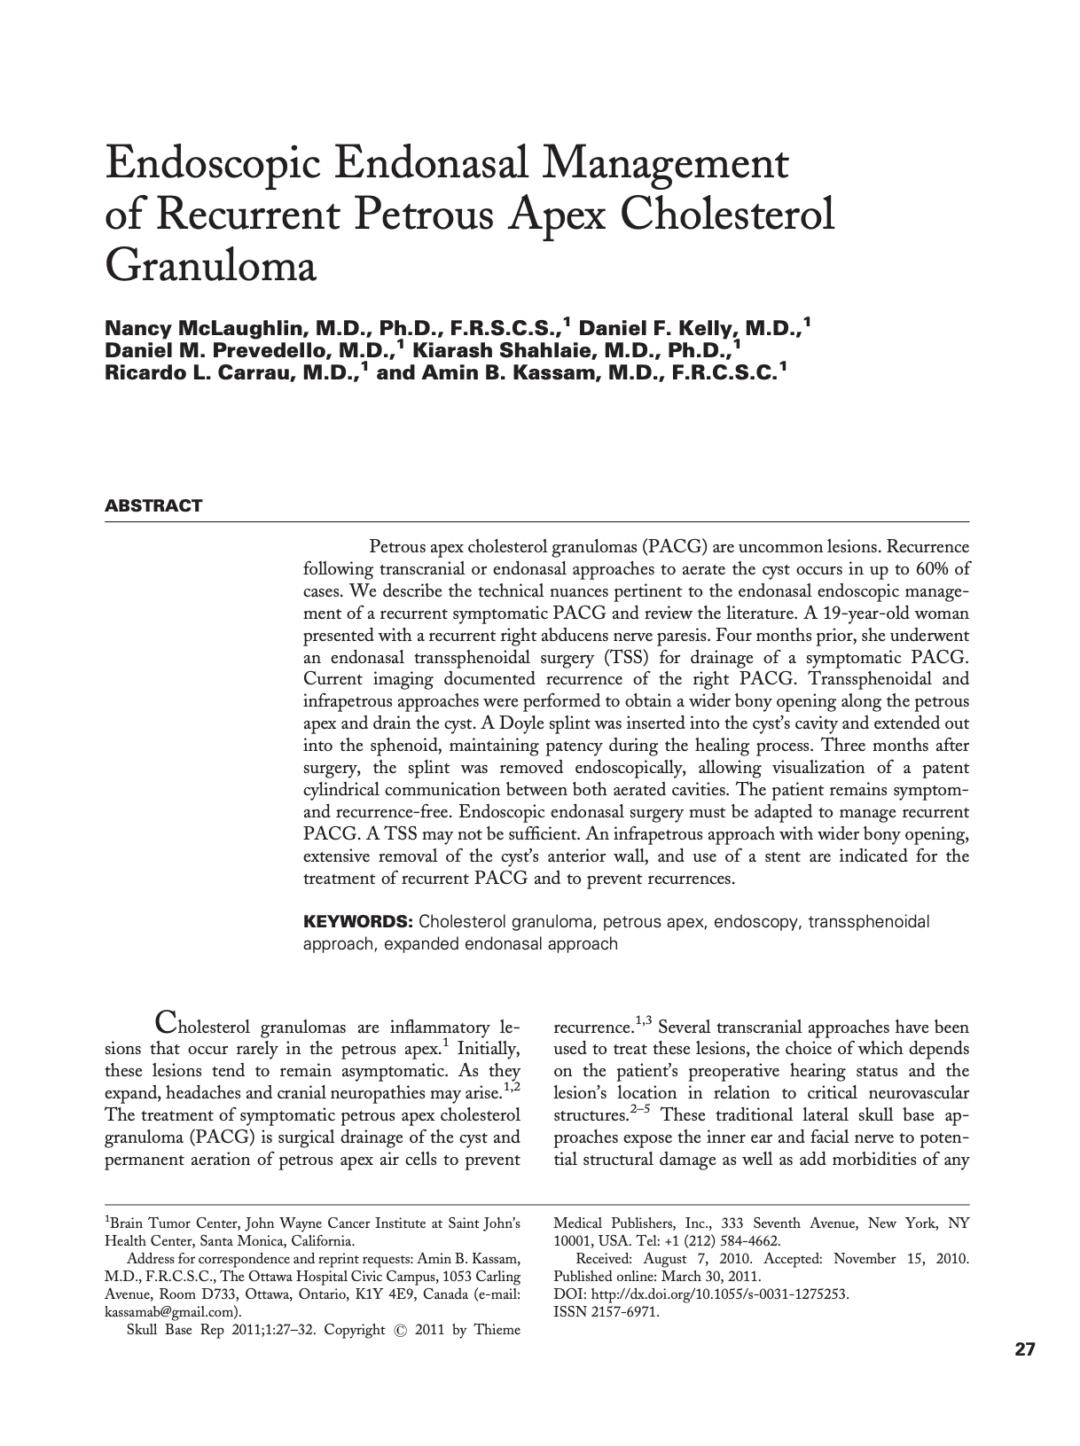 Endoscopic Endonasal Management of Recurrent Petrous Apex Cholesterol Granuloma